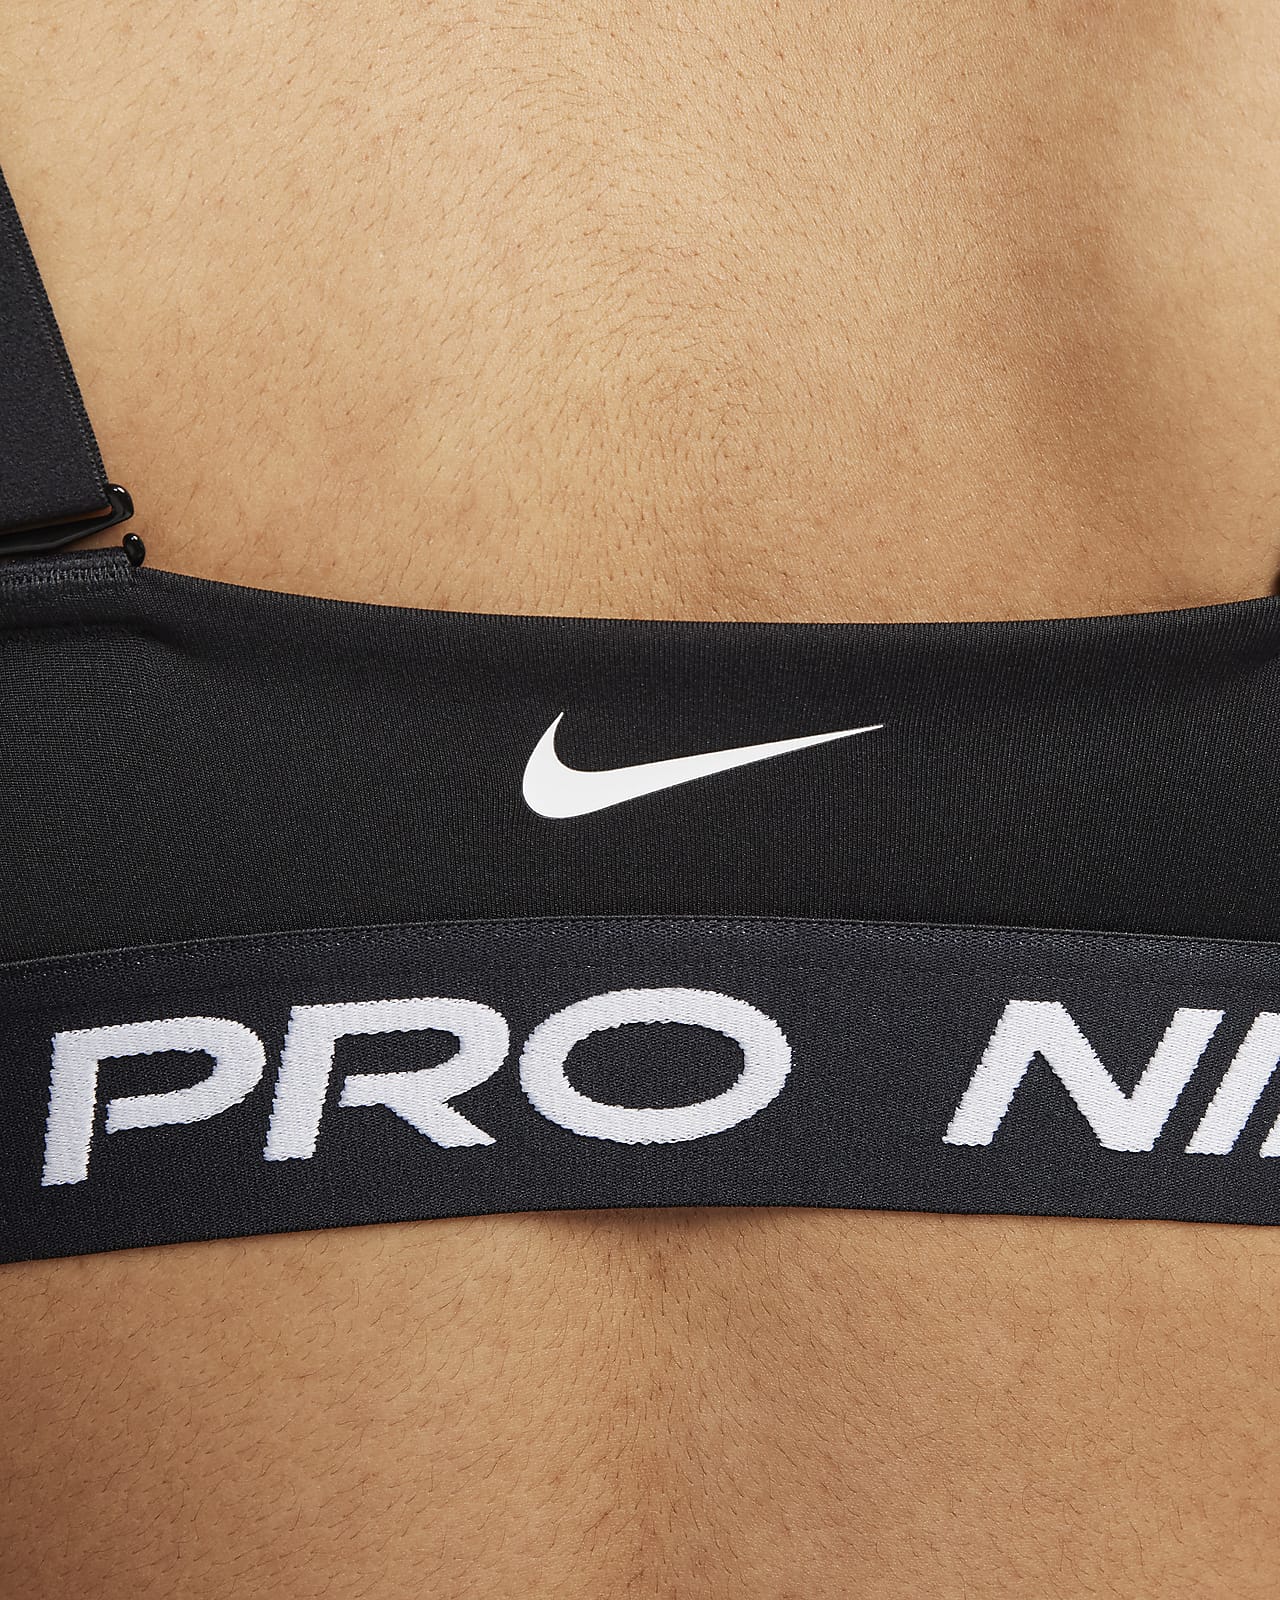 Nike Pro Sports Bras. Nike LU